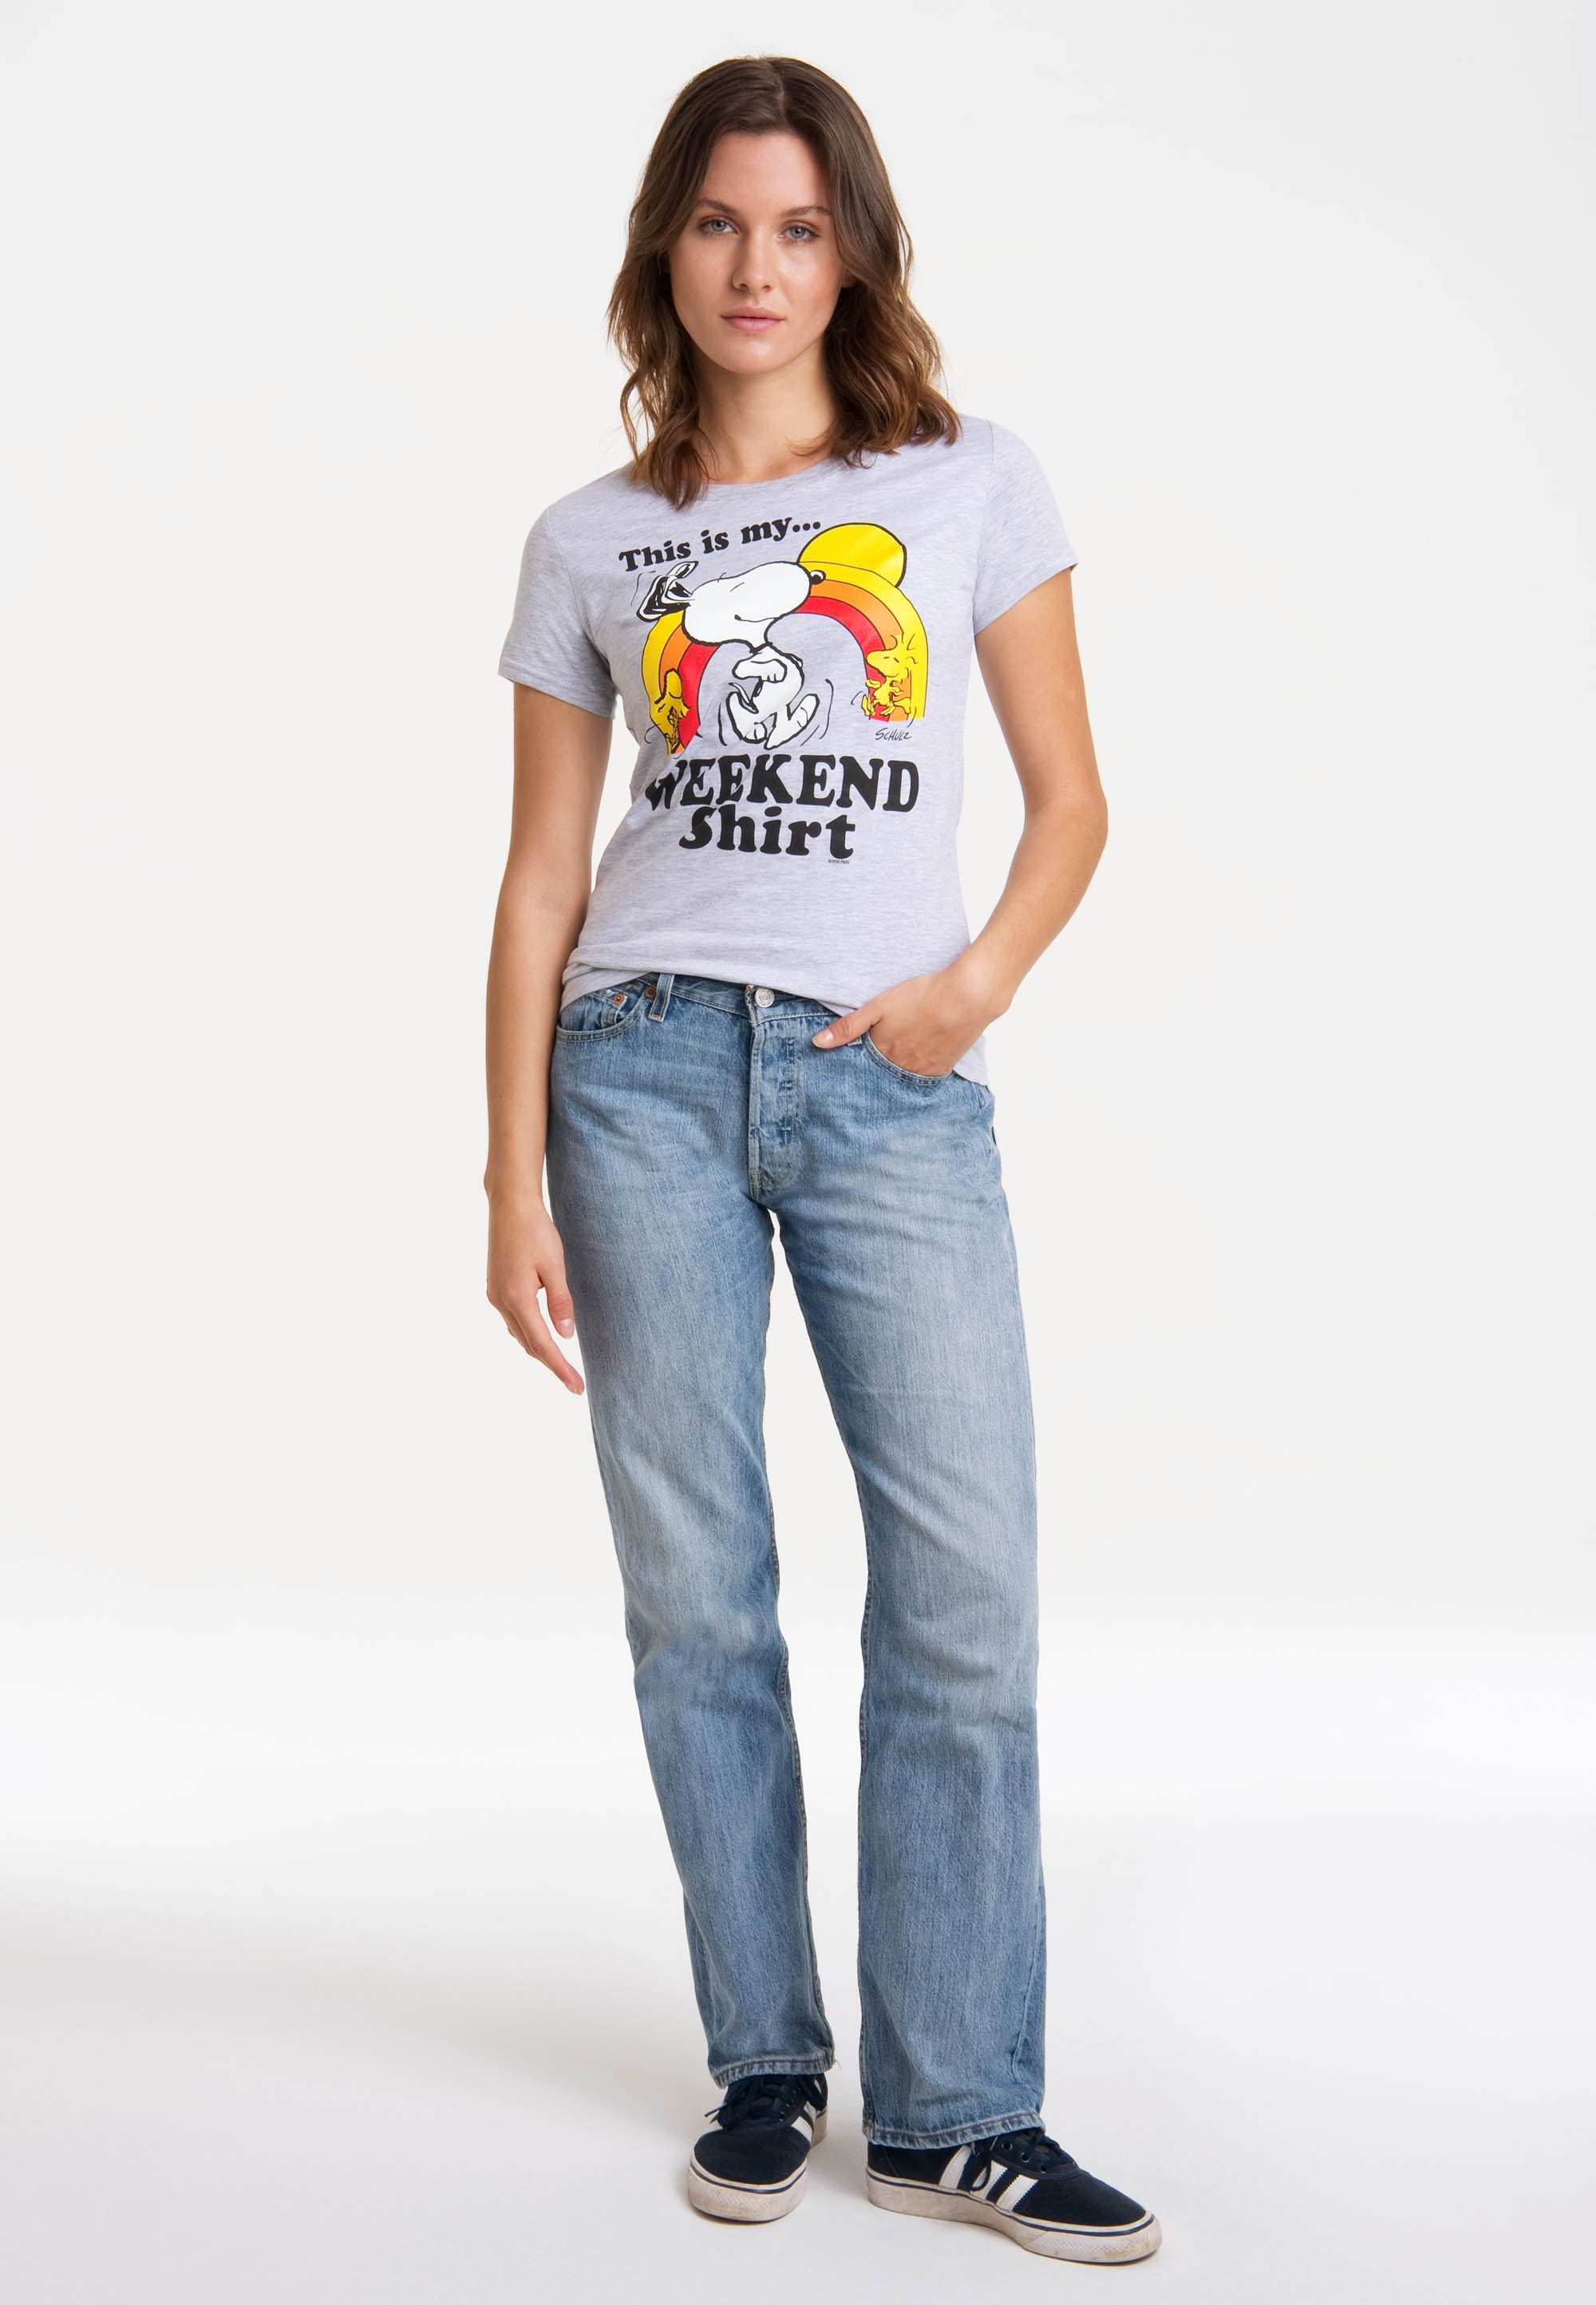 Woodstock - & Peanuts Weekend lizenziertem LOGOSHIRT - T-Shirt Originaldesign mit Snoopy